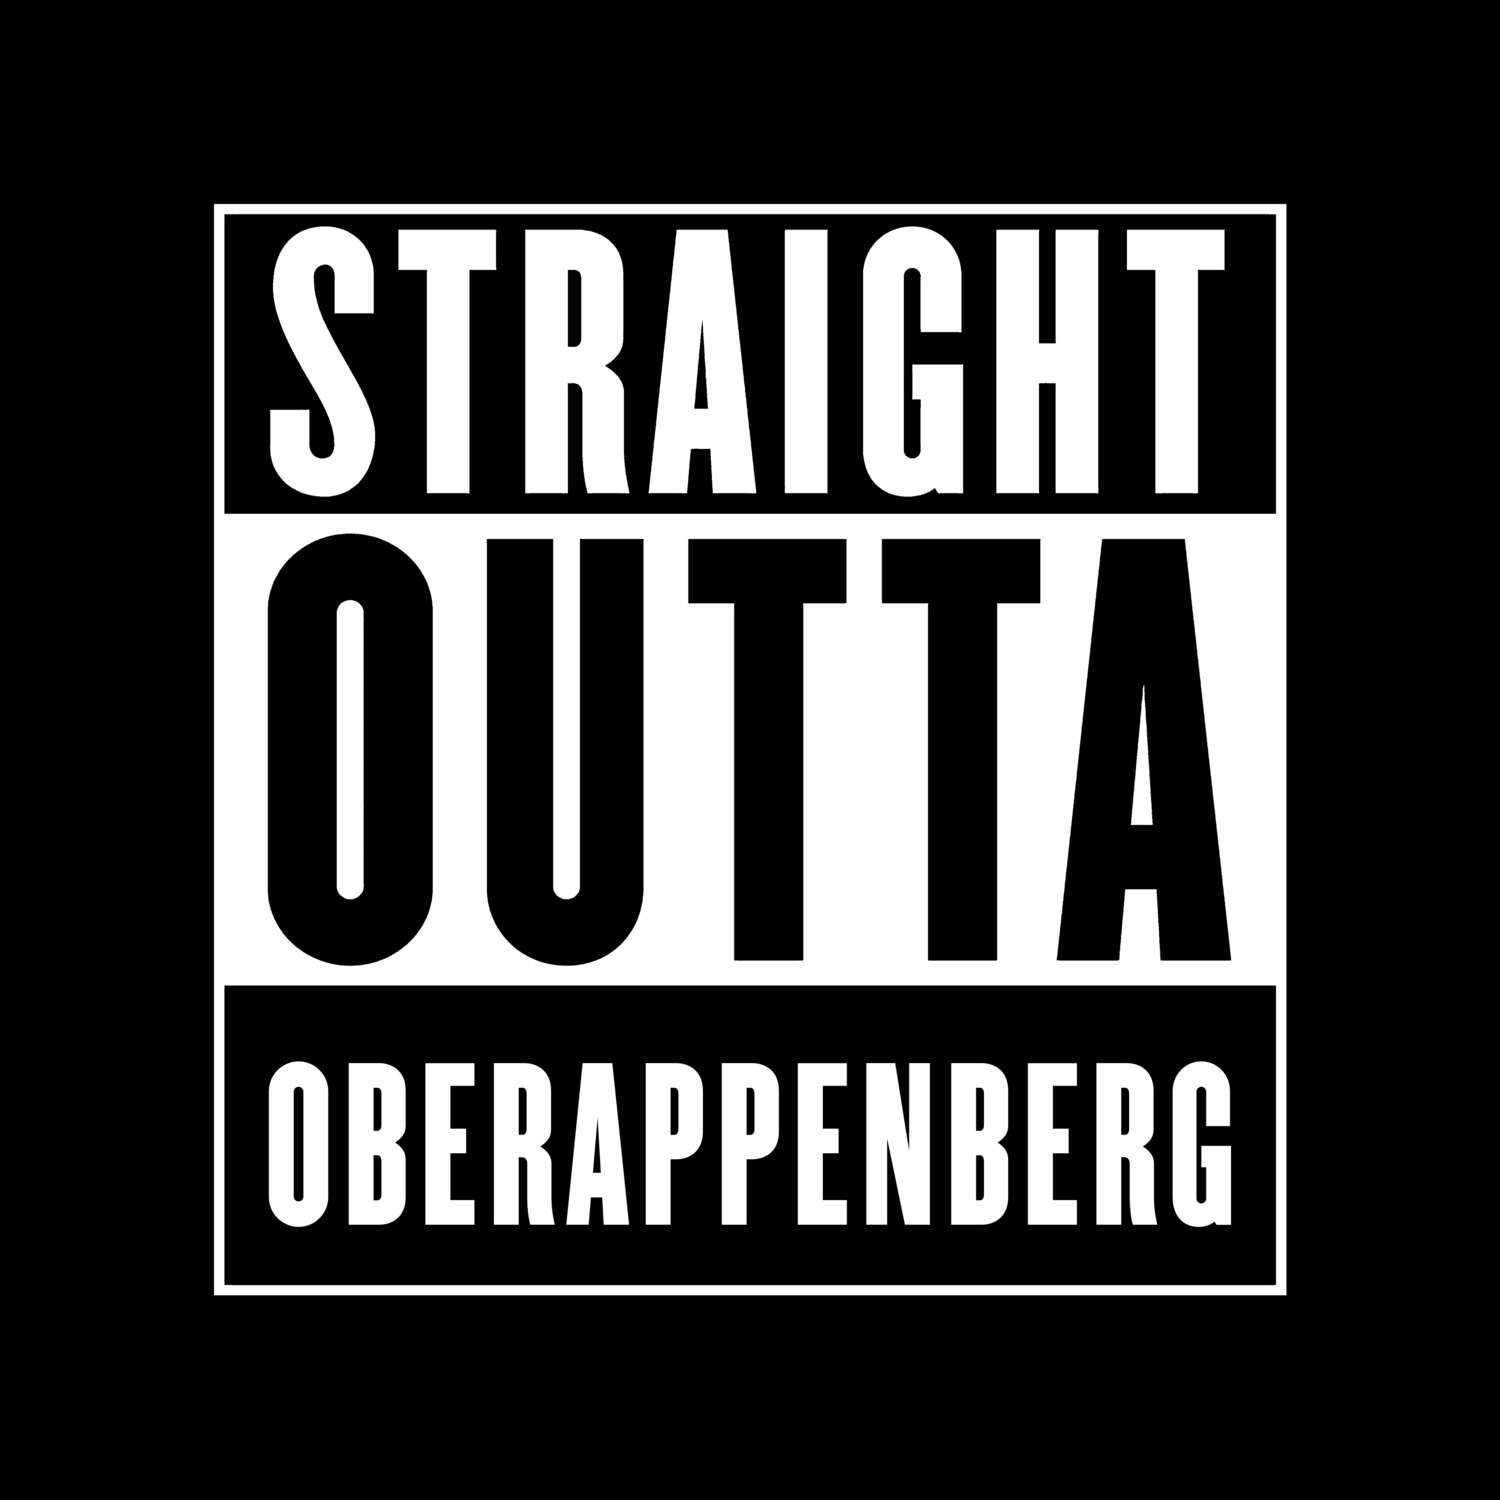 Oberappenberg T-Shirt »Straight Outta«